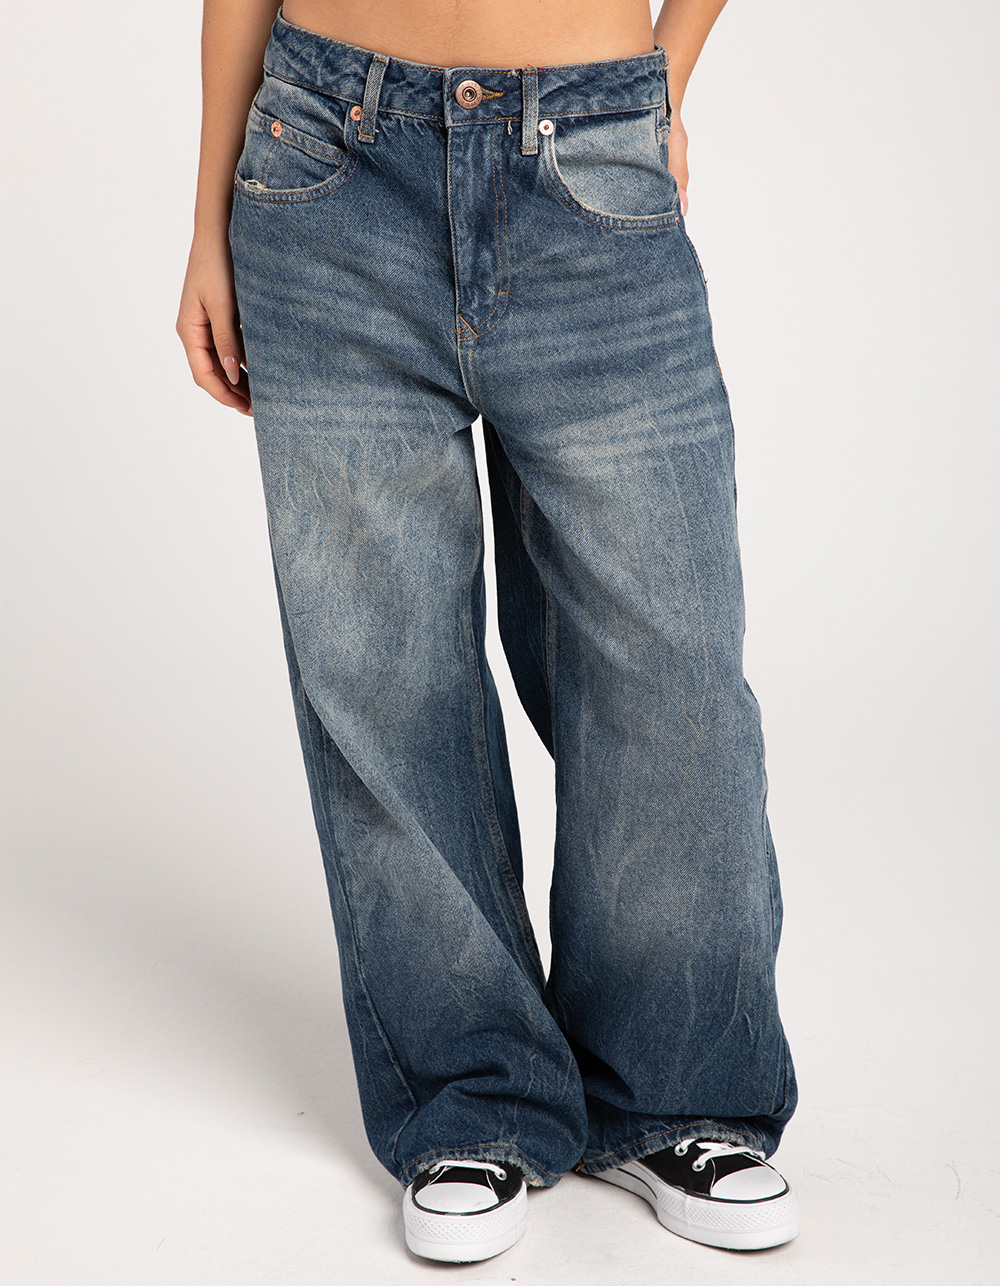 BDG Urban Outfitters Jaya Baggy Boyfriend Womens Jeans - DARK